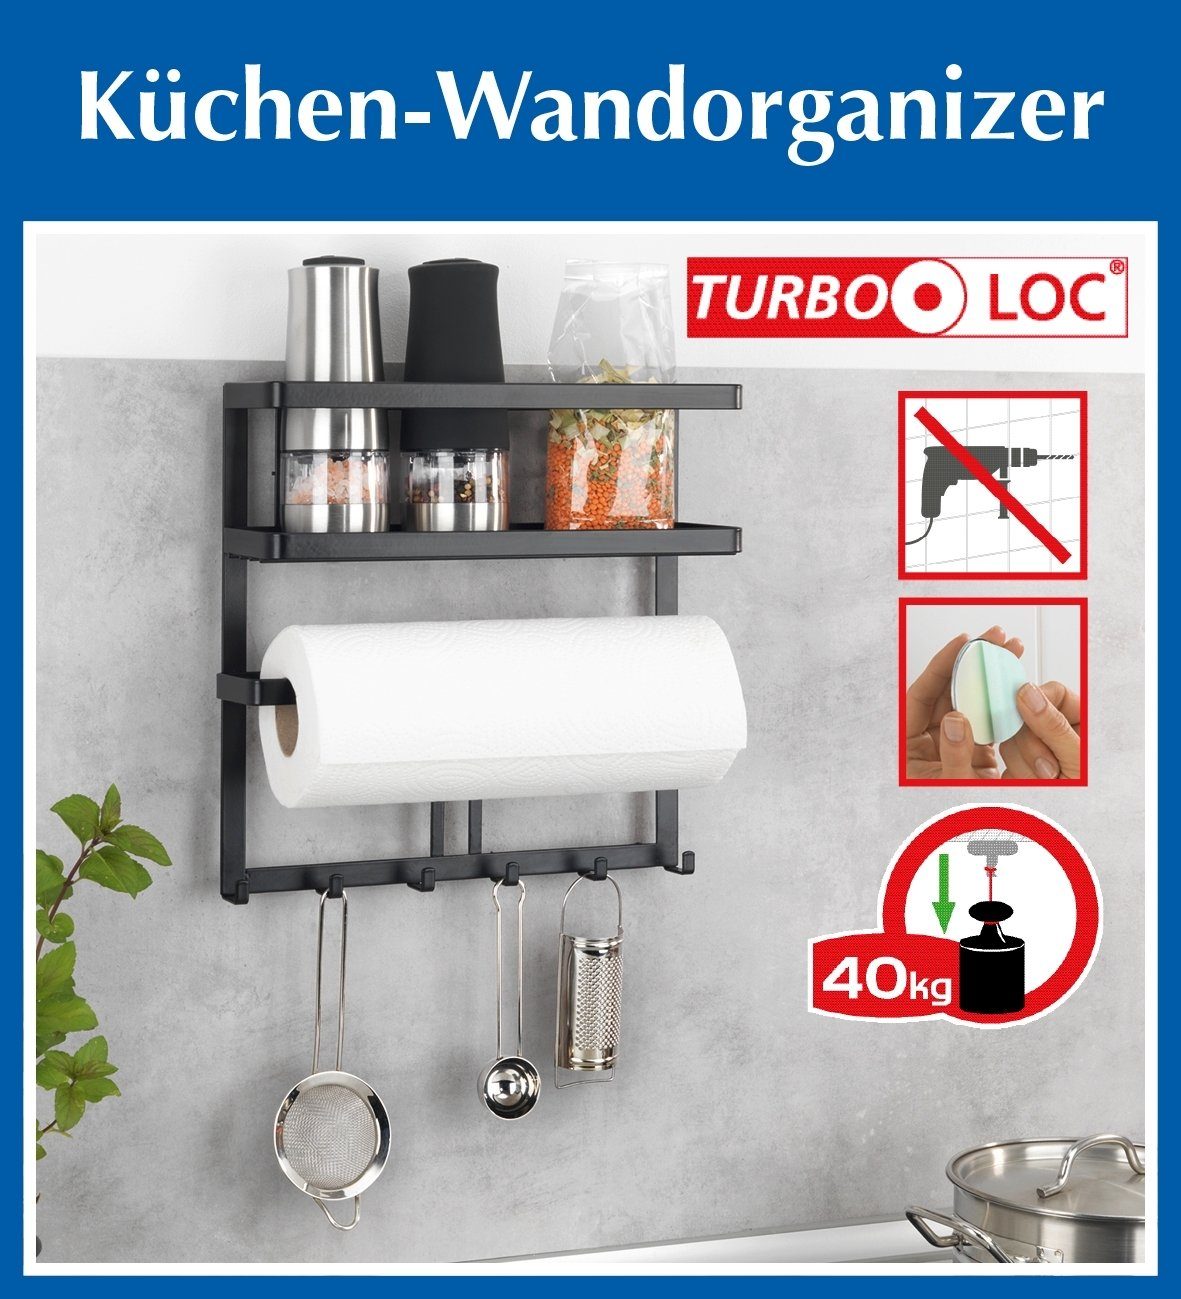 Maximex Küchenregal Turbo Loc Küchen Wandorganizer Maße ca.: B: 30 cm x H: 33 cm x T: 9 cm